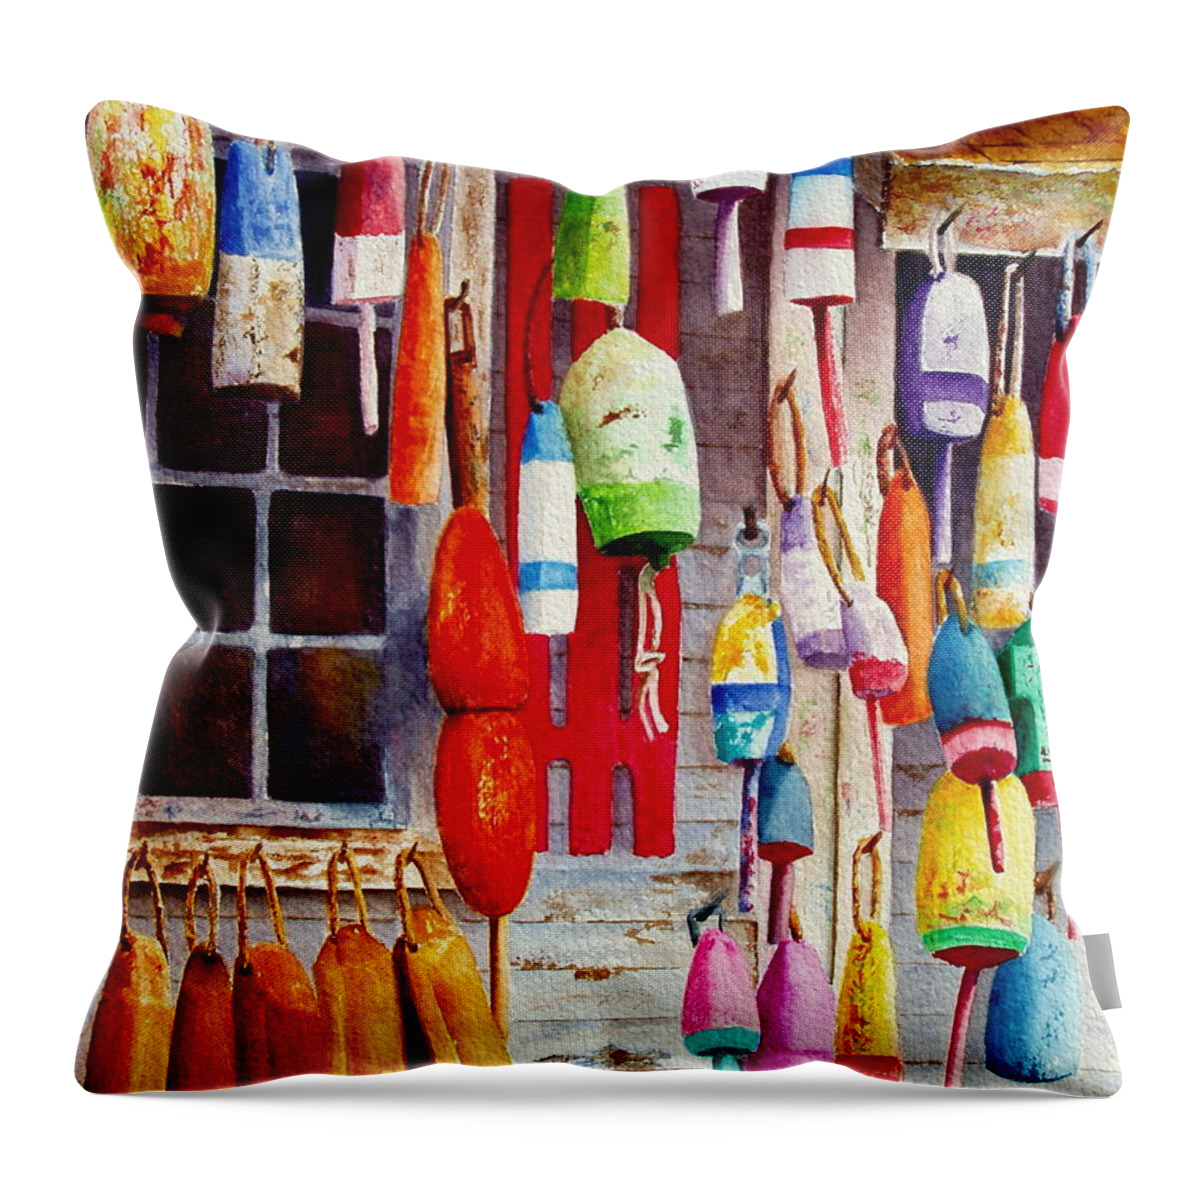 Lobster Throw Pillow featuring the painting Hanging Around by Karen Fleschler